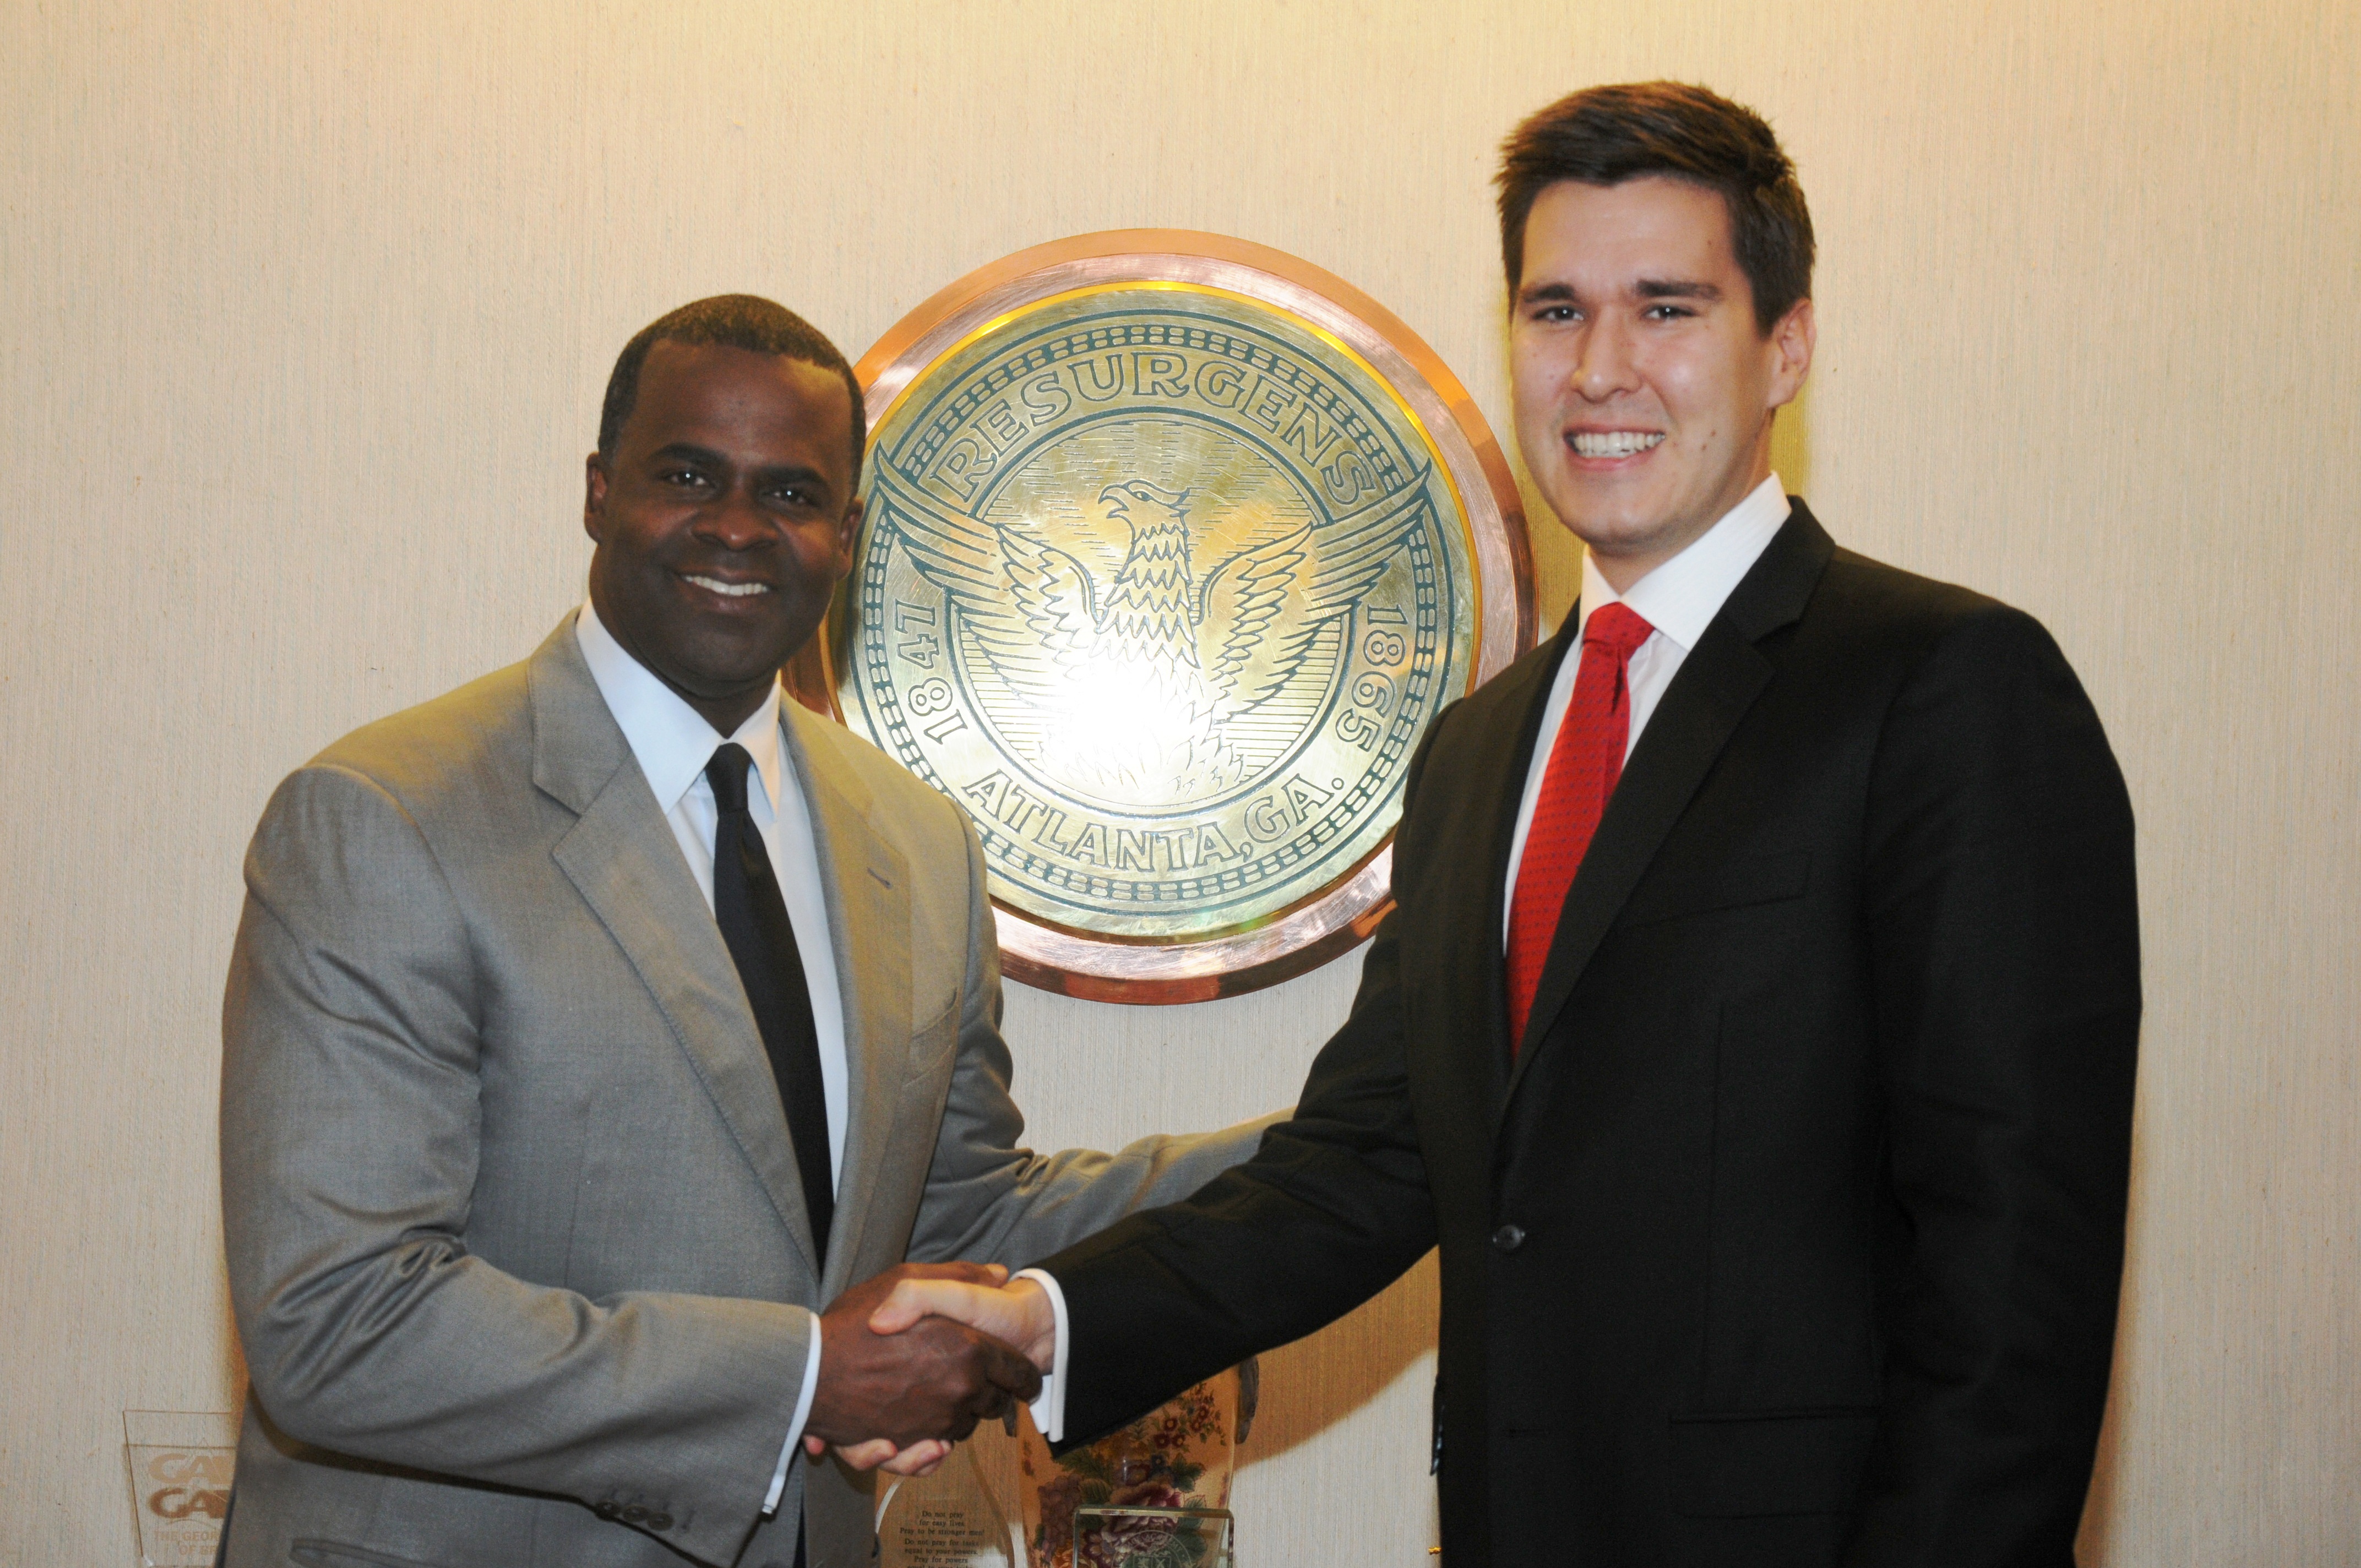 Atlanta Mayor Congratulates New Business Leader W. Lamar Chesney Jr.